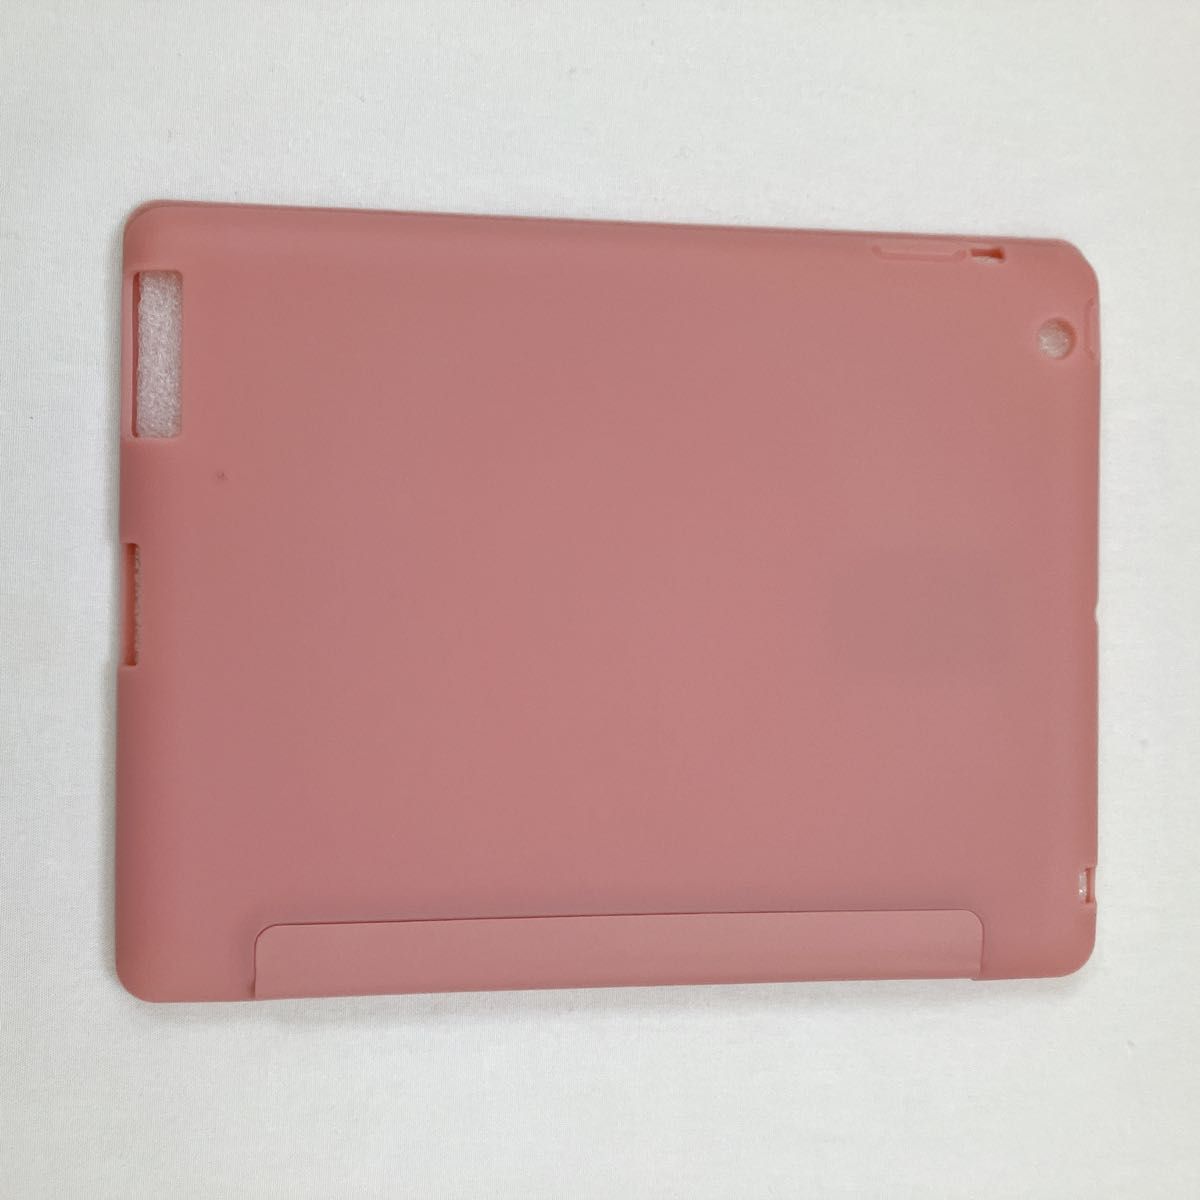 VAGHVEO iPad 2/3/4 ケース 超薄型 超軽量 TPU ソフトスマートカバー オートスリープ機能  衝撃吸収 全般